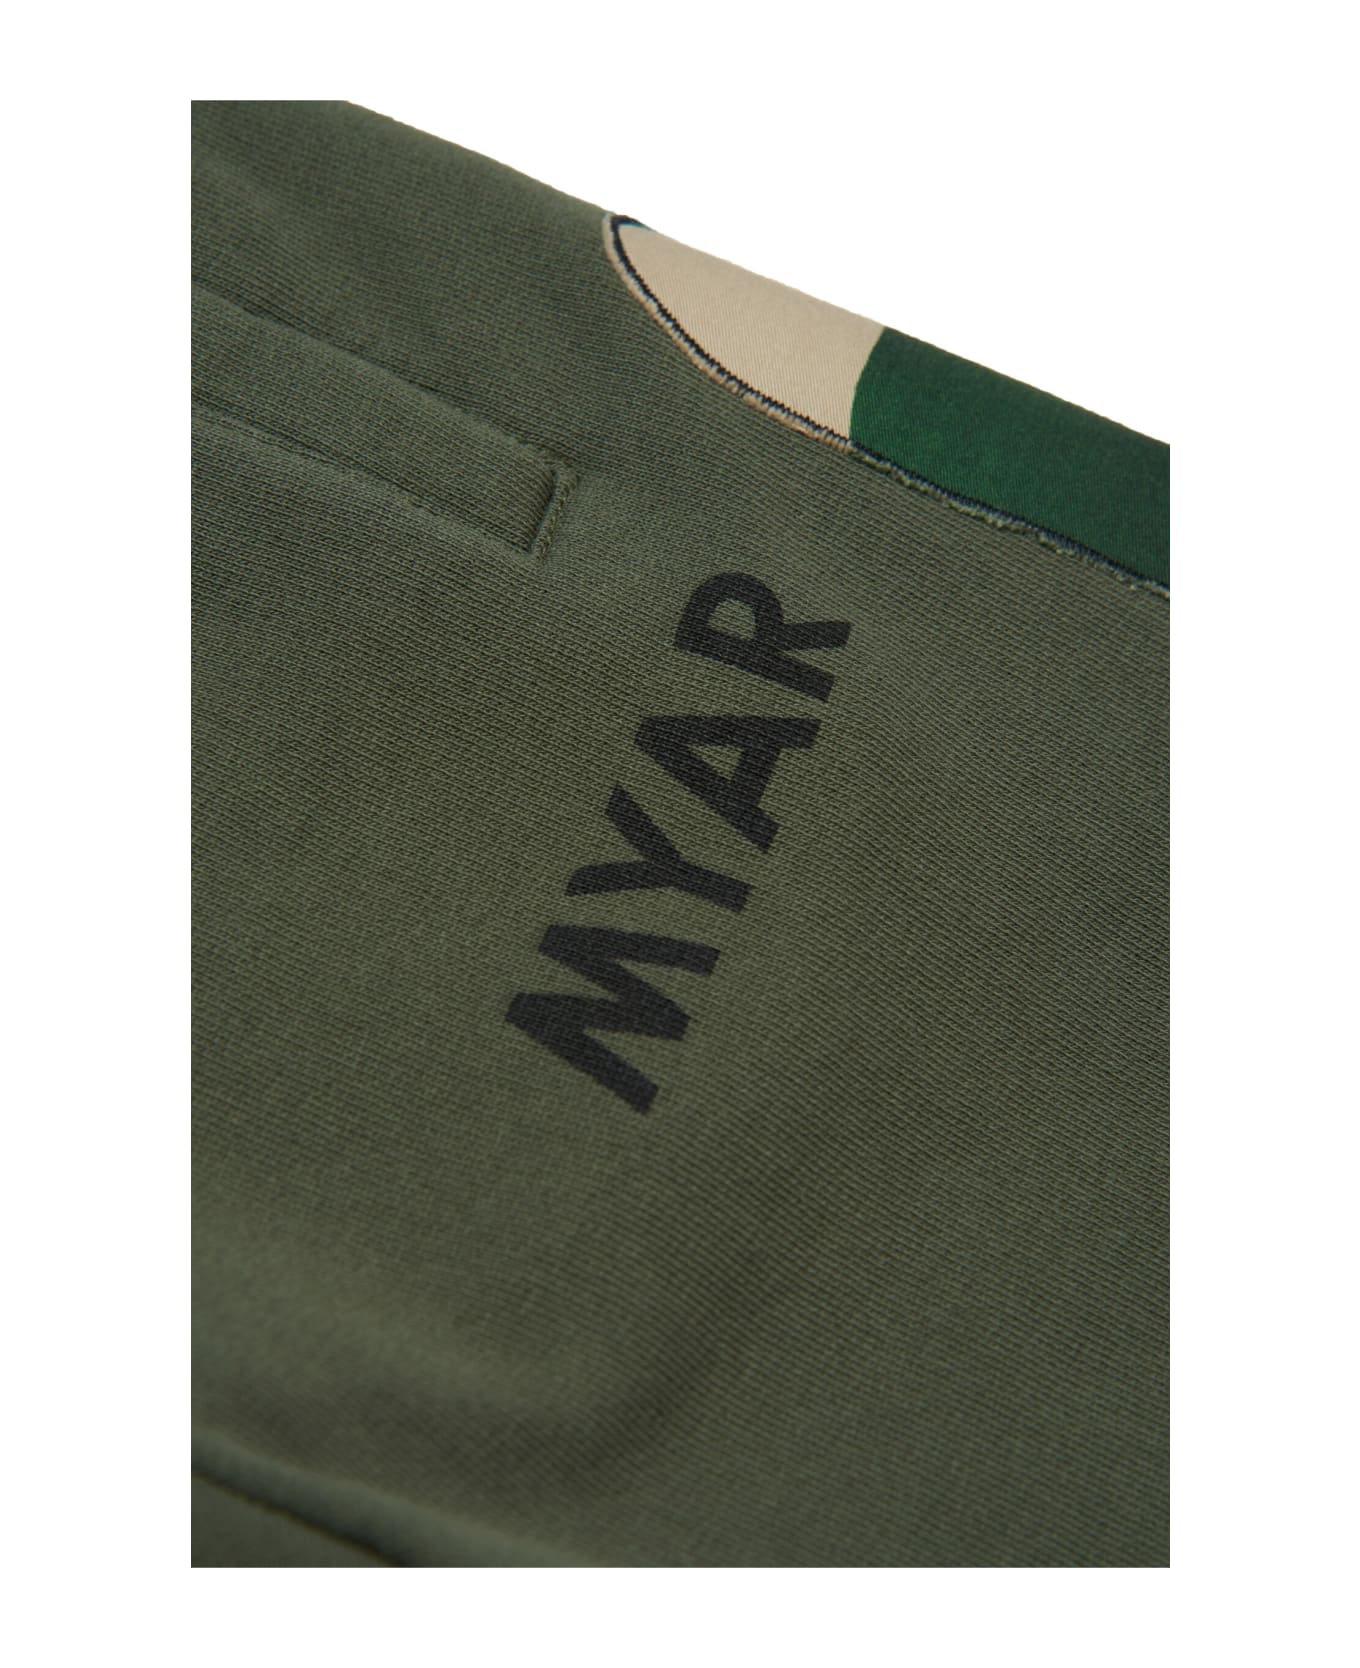 MYAR Myp13u Shorts Myar Plush Shorts With Rainforest Patterned Fabric Application - Army green